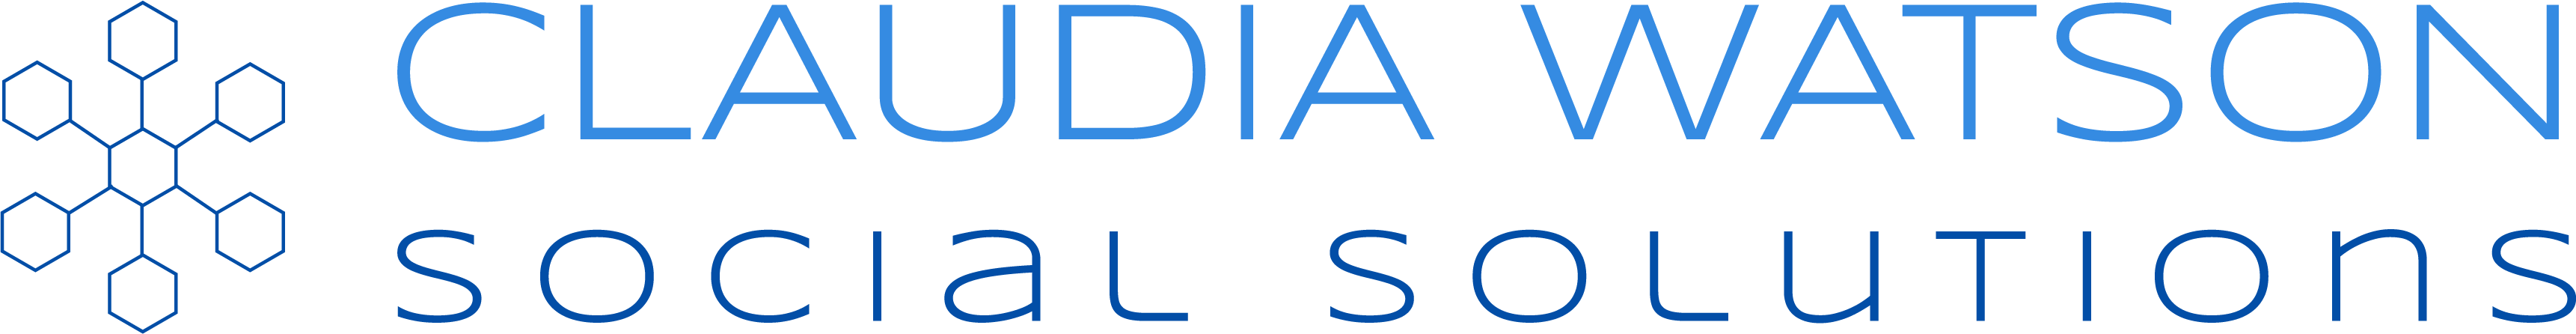 Claudia Watson Social Solutions - Logo